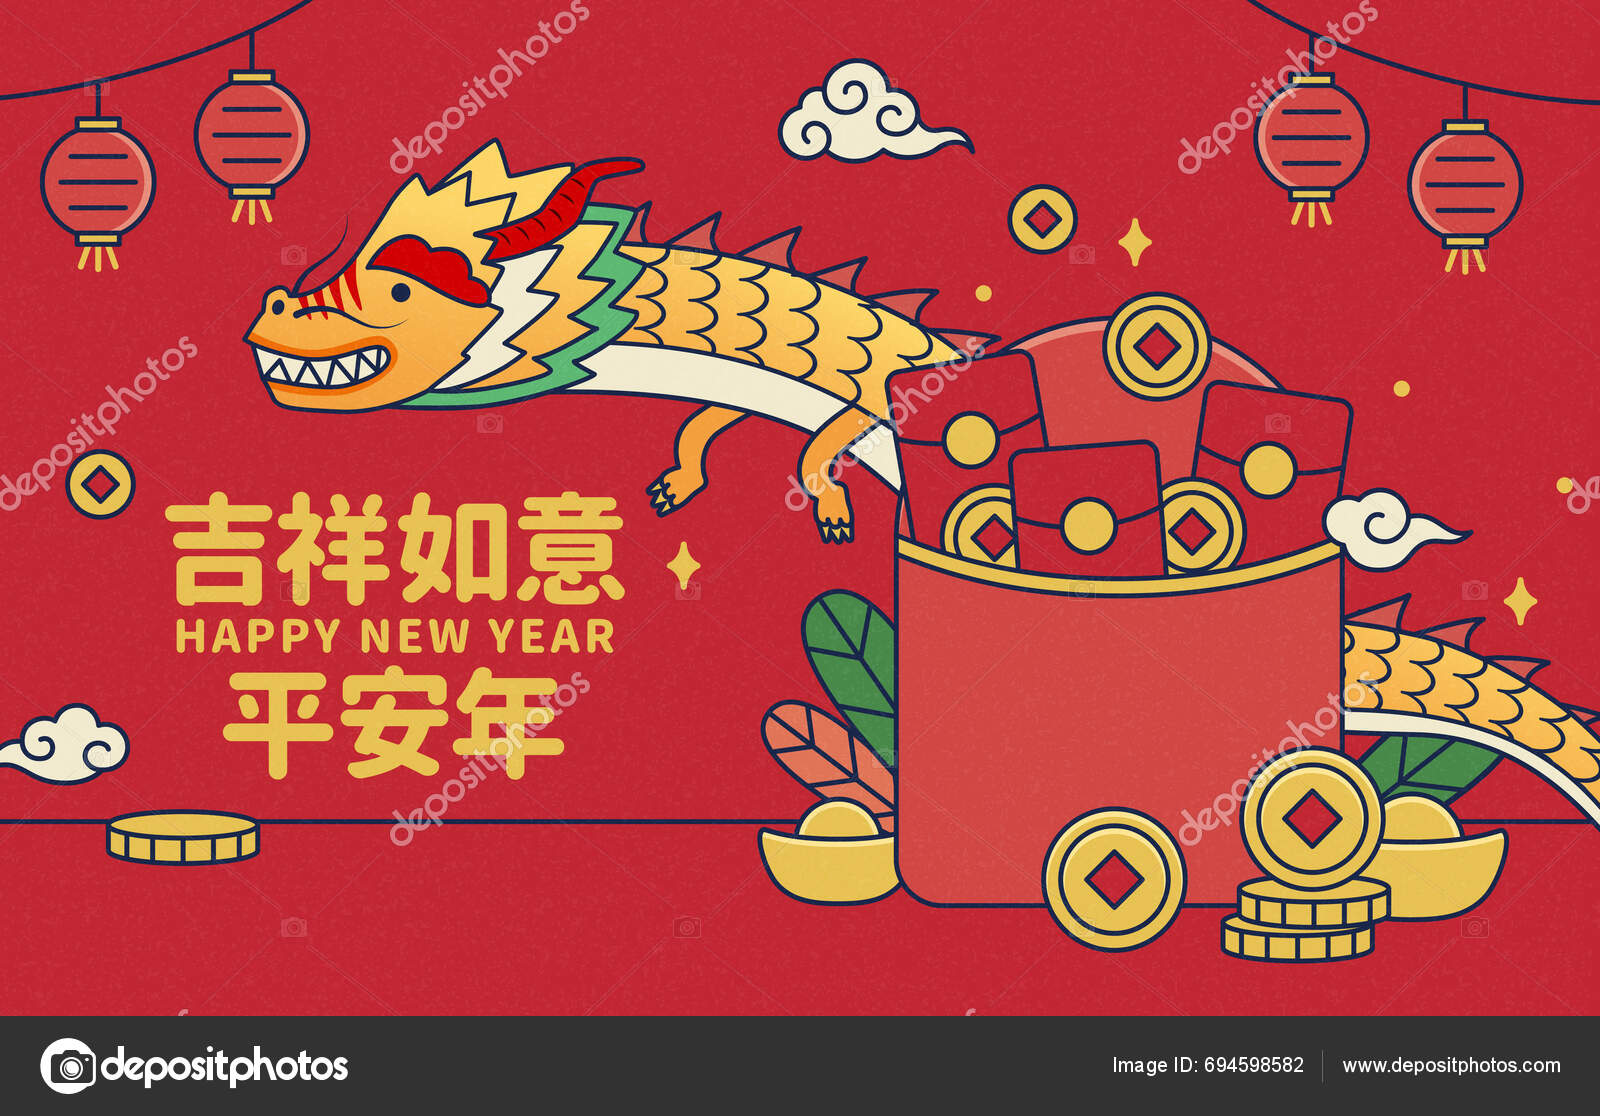 Adorable Line Art Cny Card Dragon Festive Decors Text Good Stock Vector ...